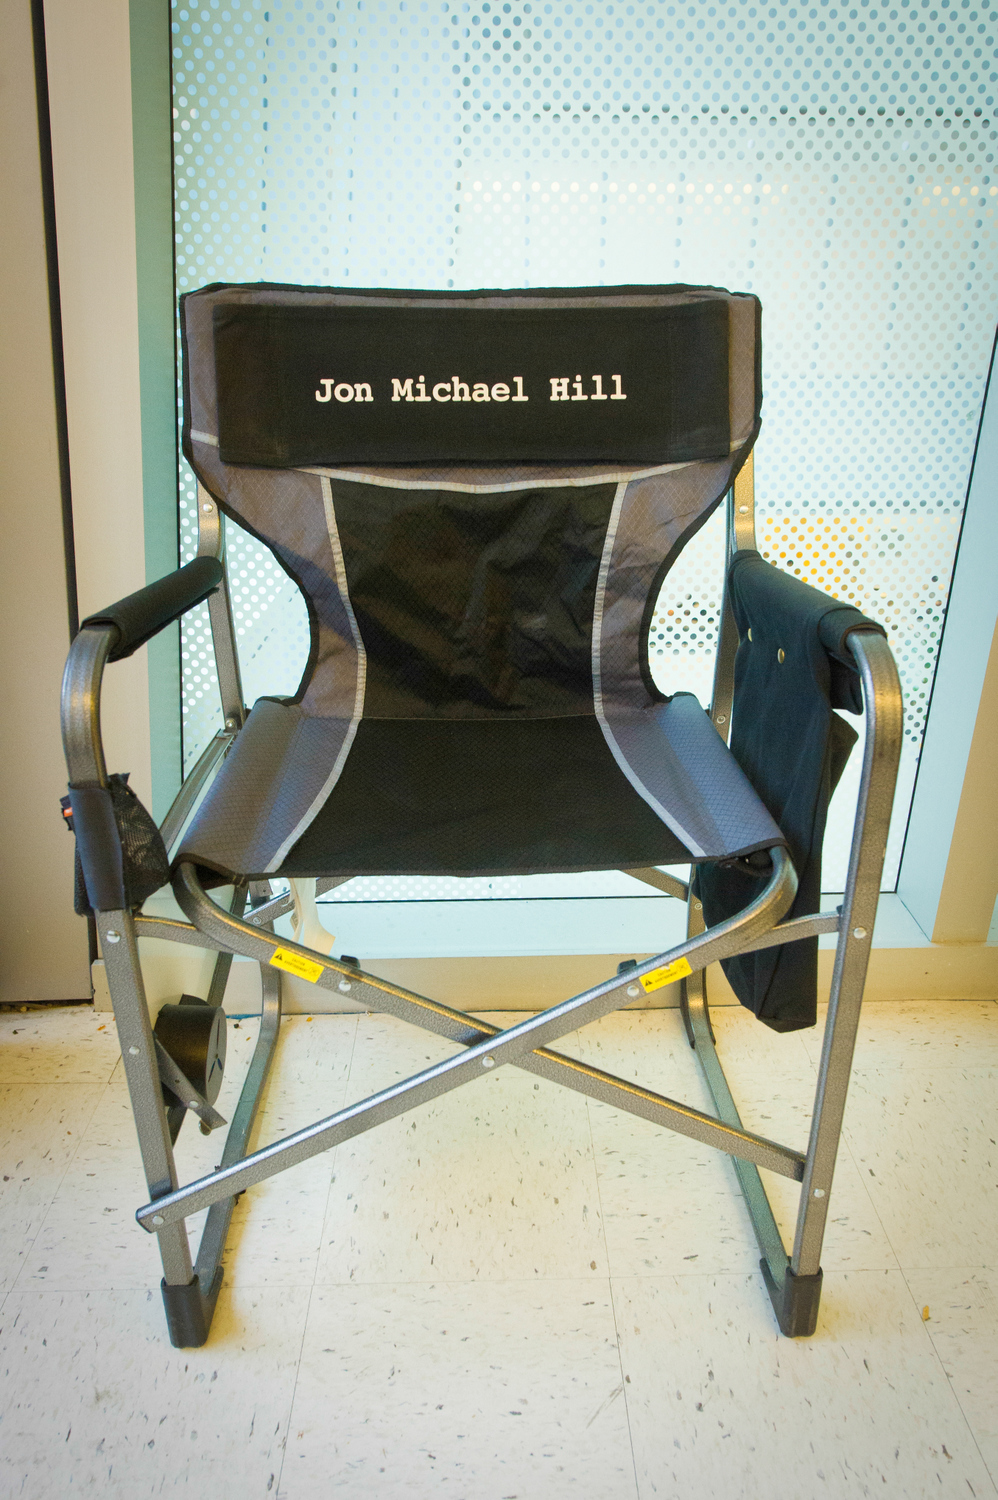 Jon Michael Hill's chair on set